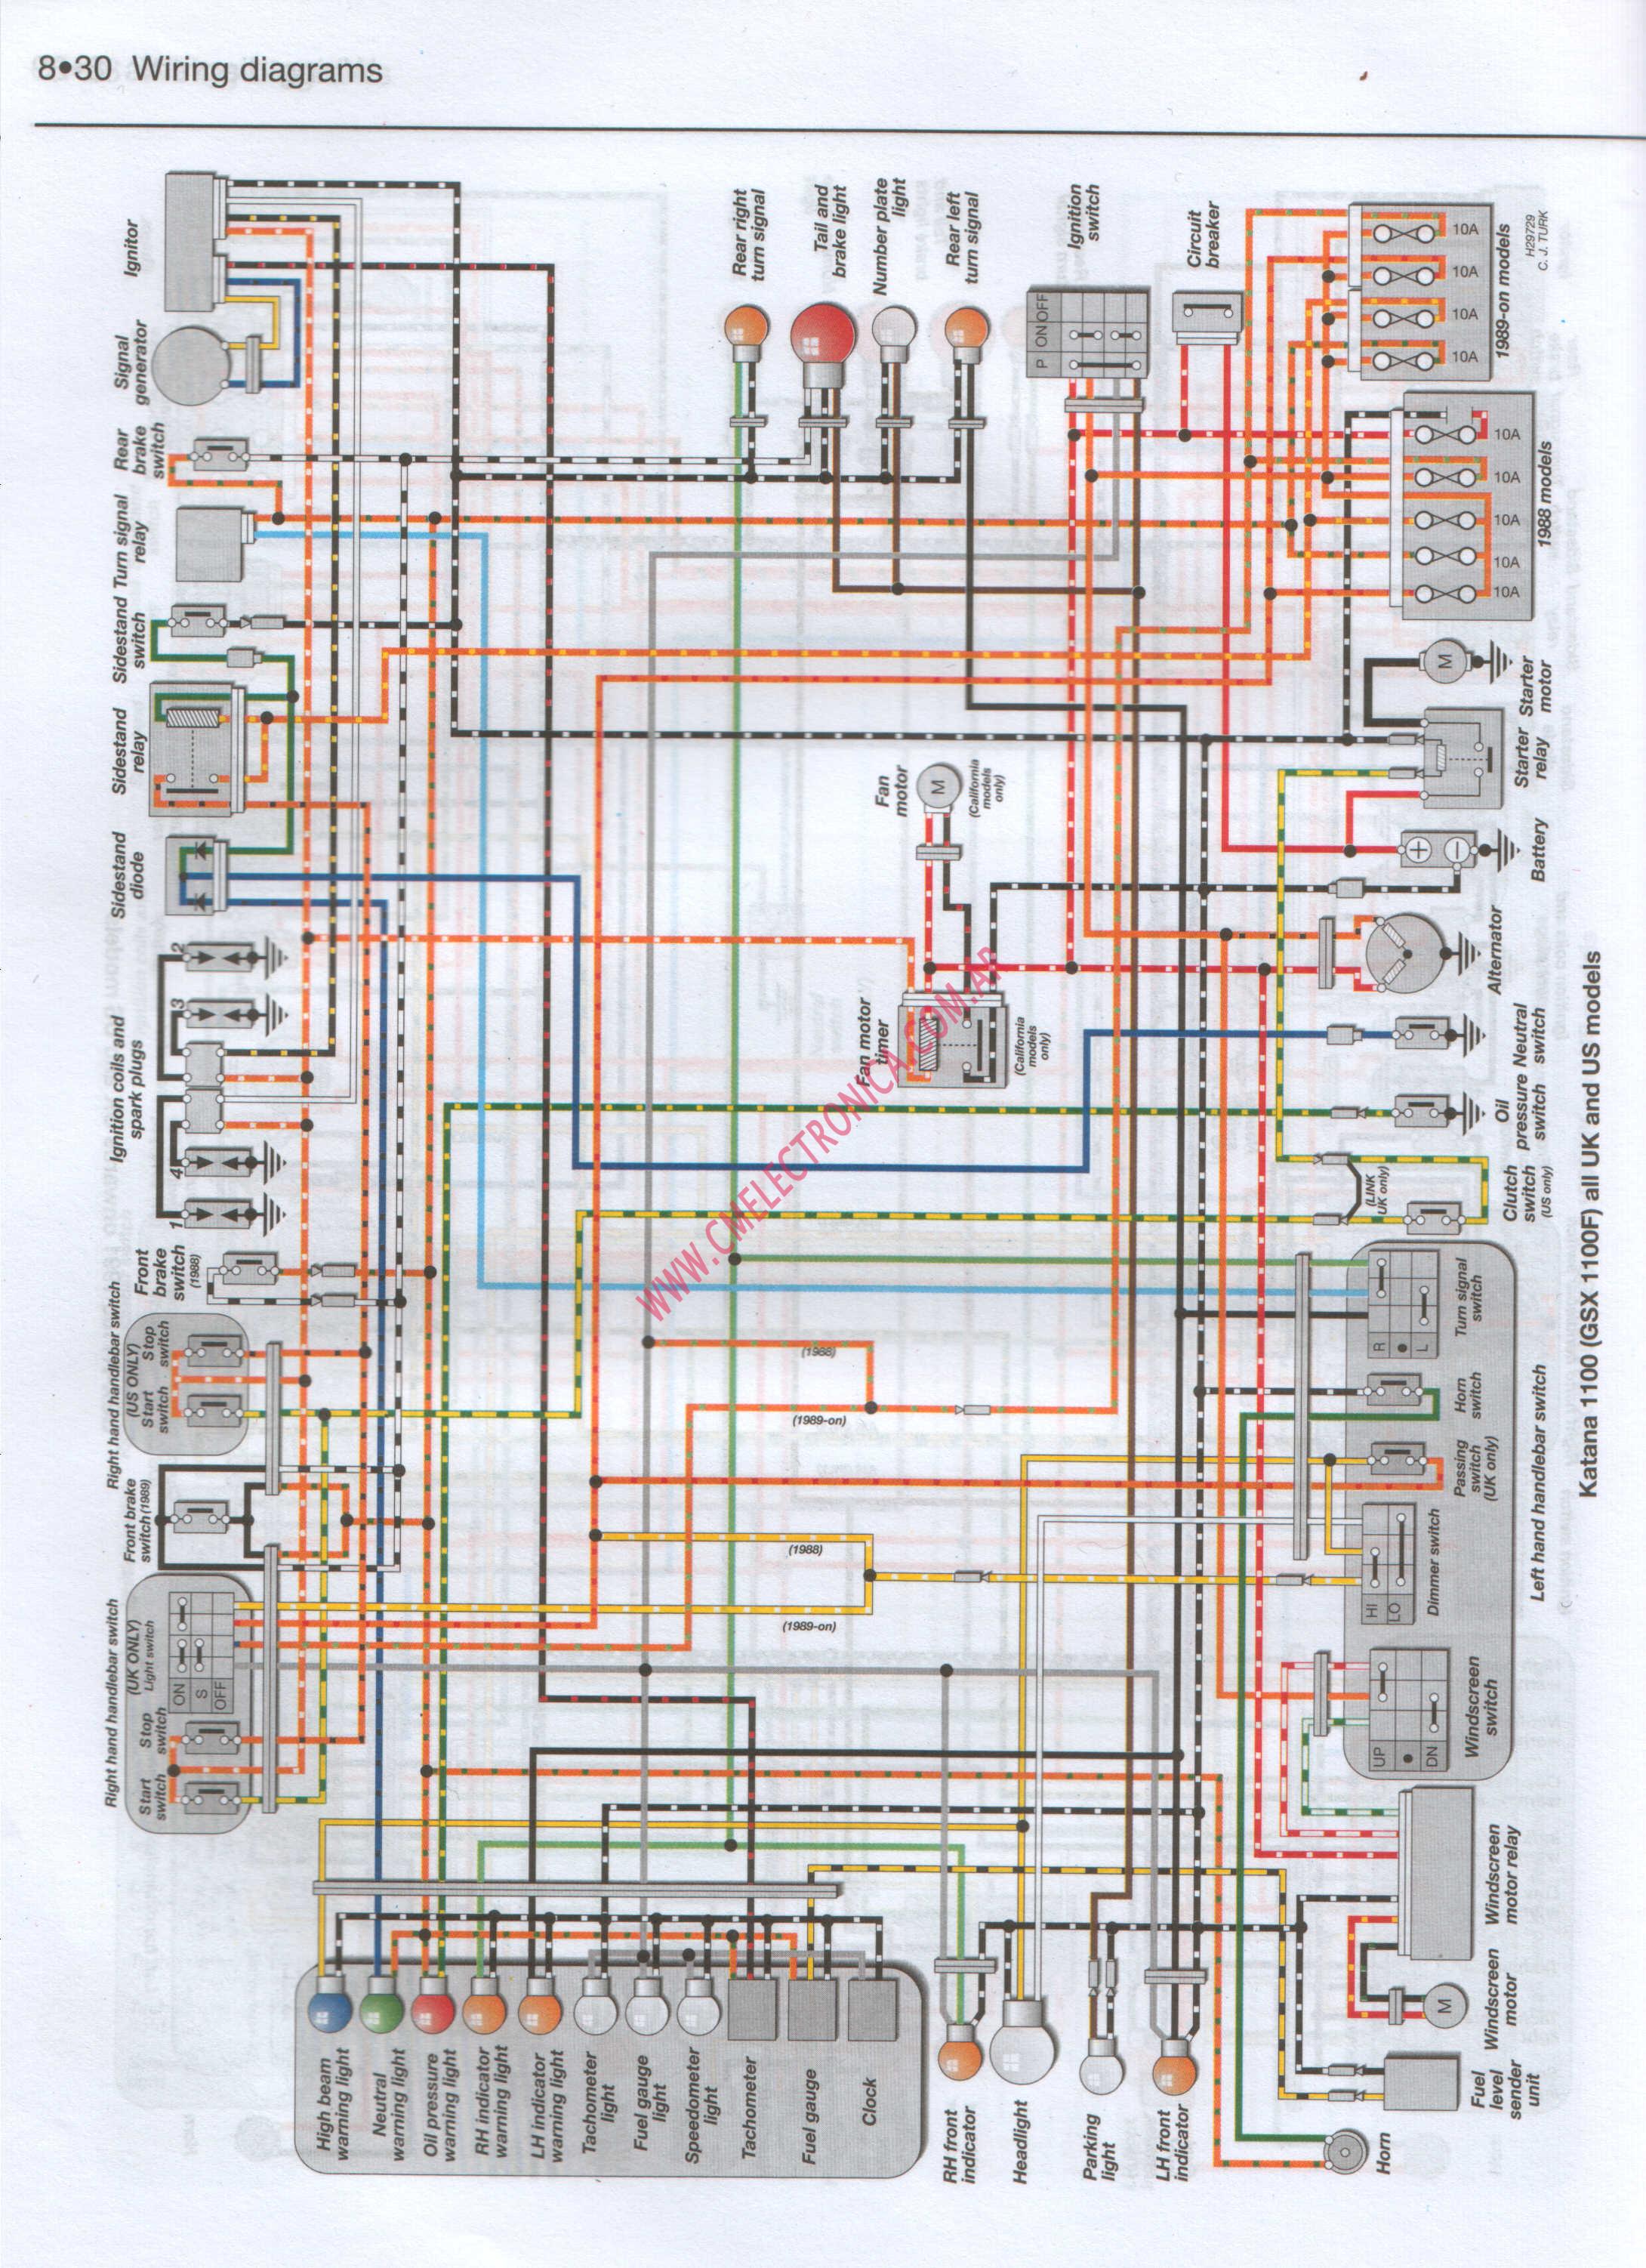 Wiring Diagram For Suzuki Bergman from www.cmelectronica.com.ar